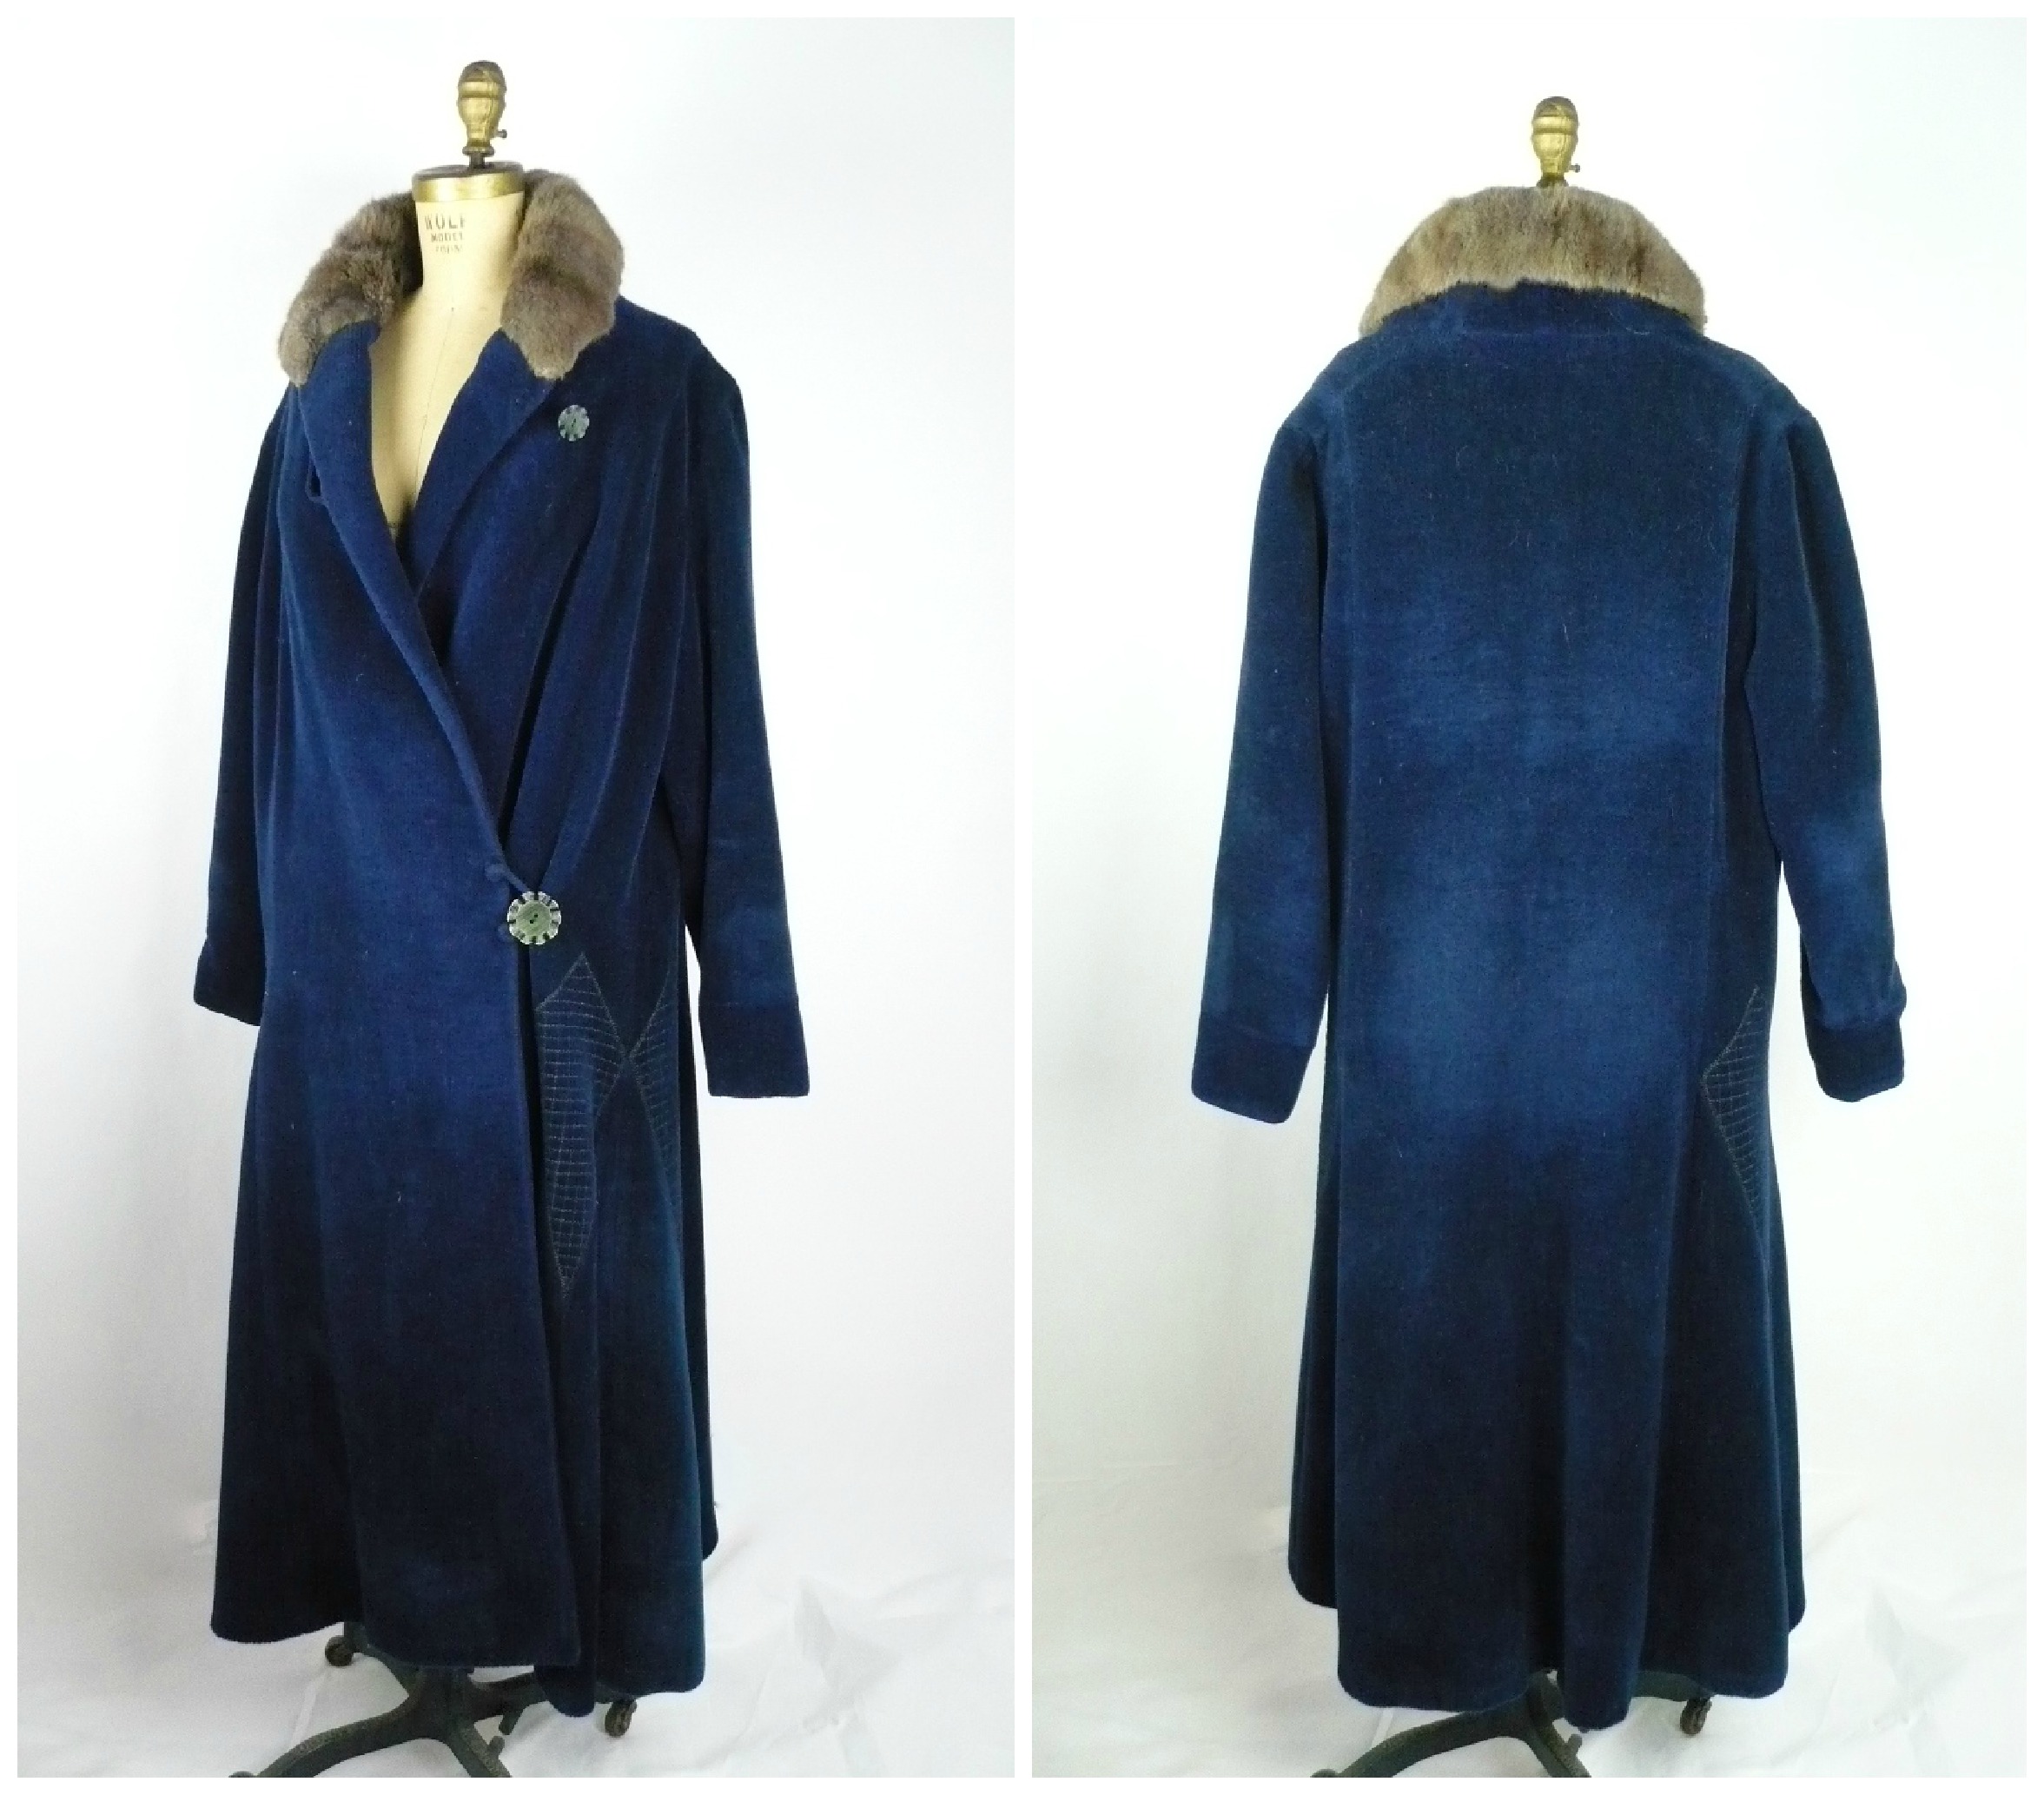 Ian Drummond Collection 20s Coats 1